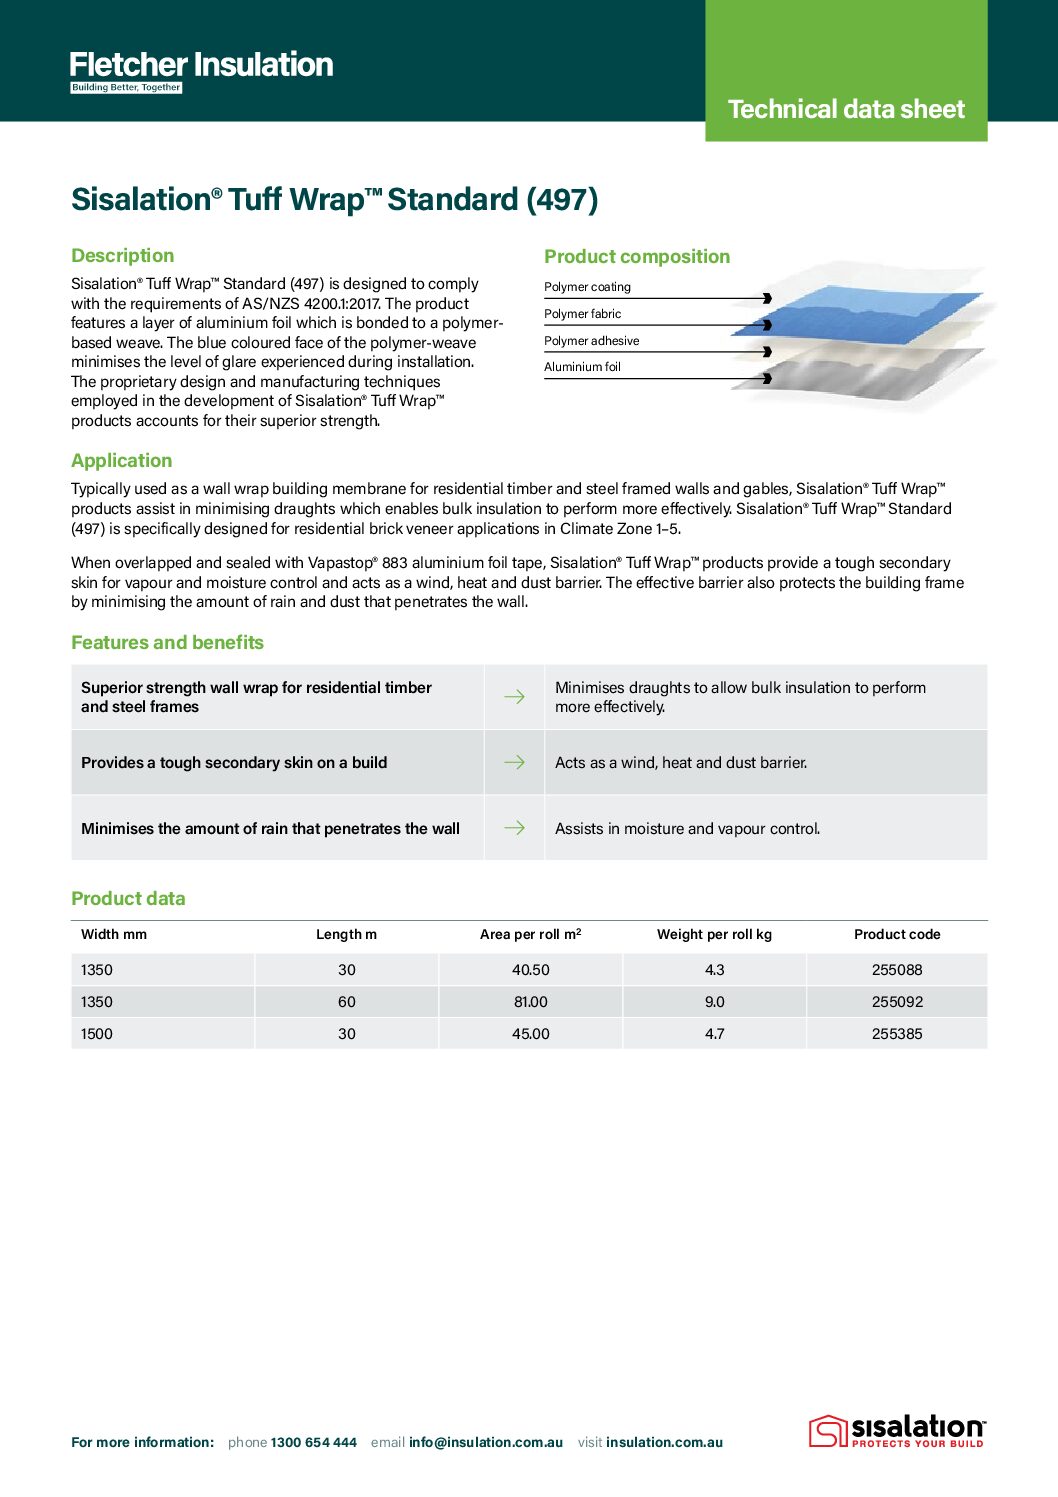 Sisalation® Tuff Wrap™ Standard (497) Technical Data Sheet